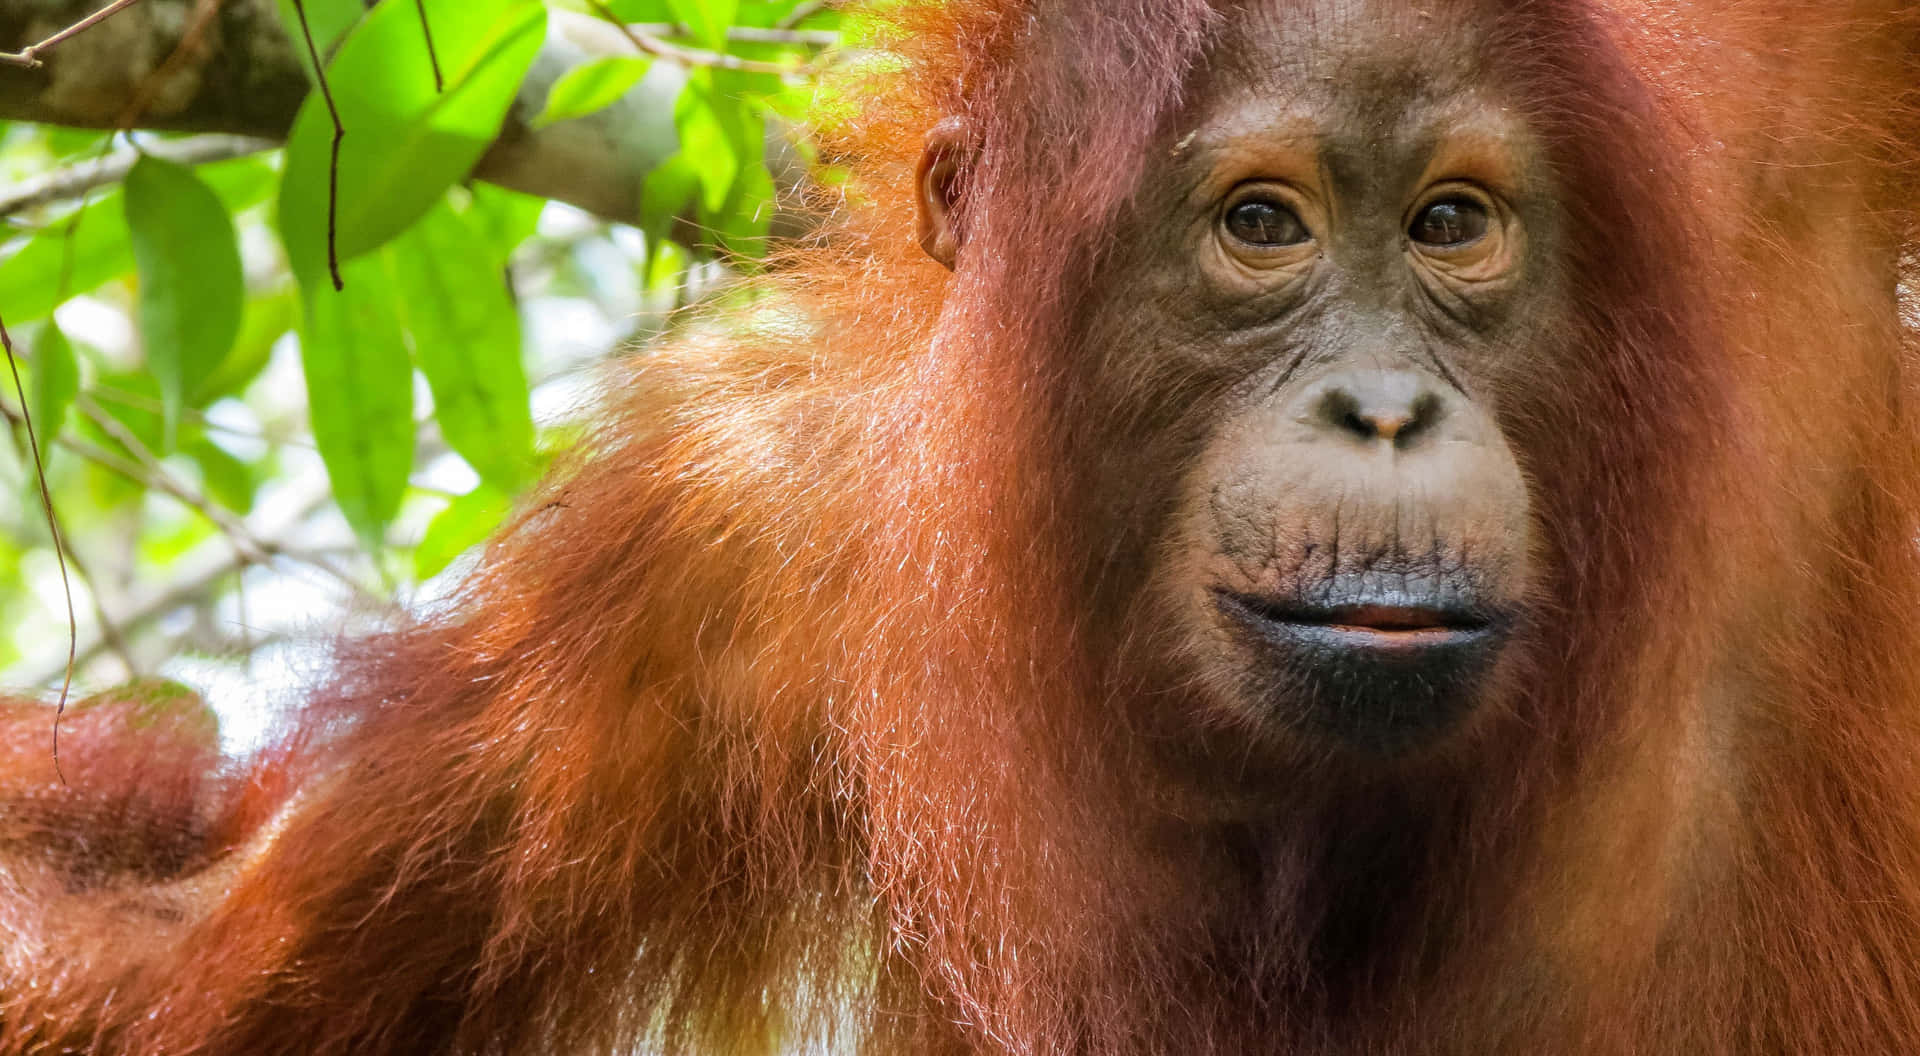 Orangutan enjoying a tasty treat!